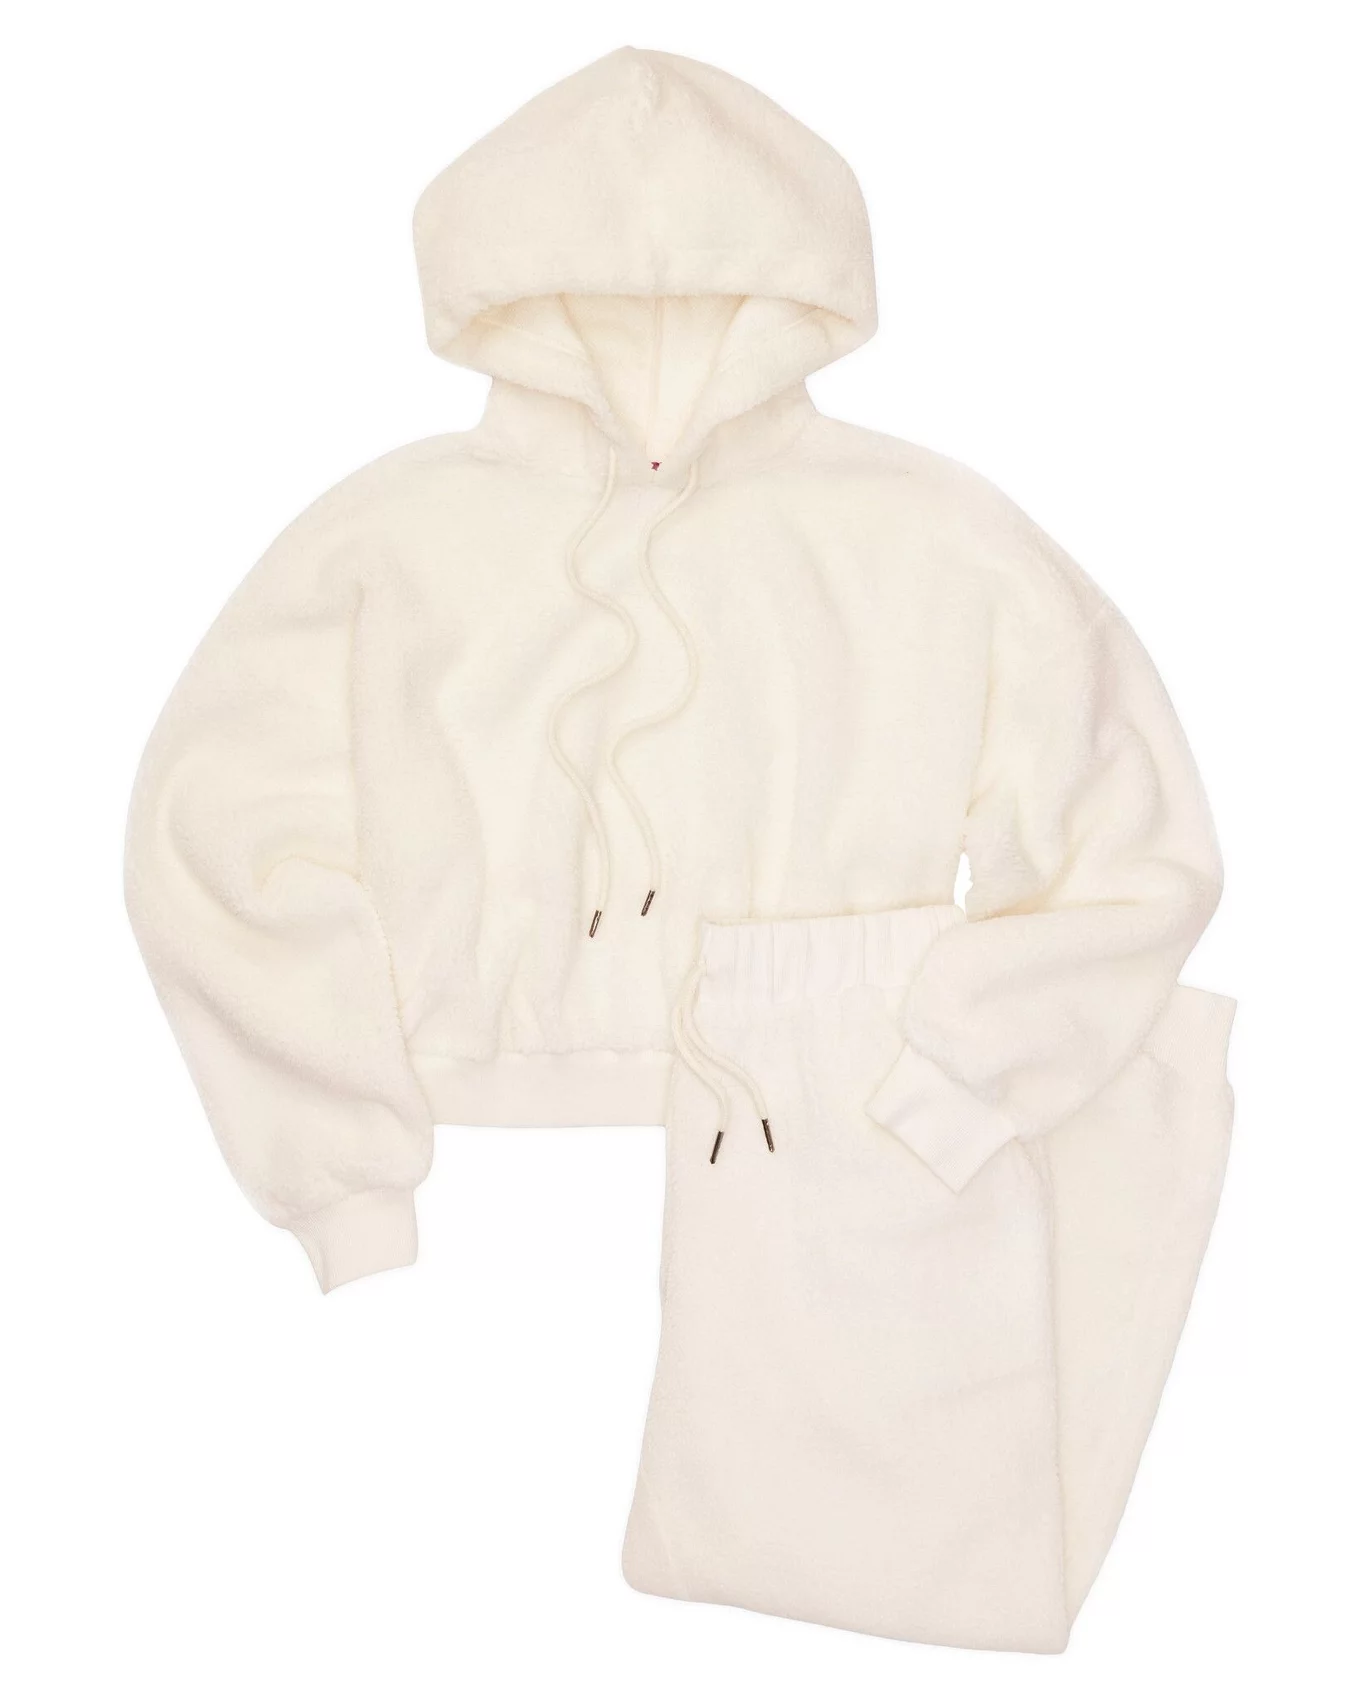 Dorothea White Plus Sherpa Sweatshirt and Pant Set, XL-3X